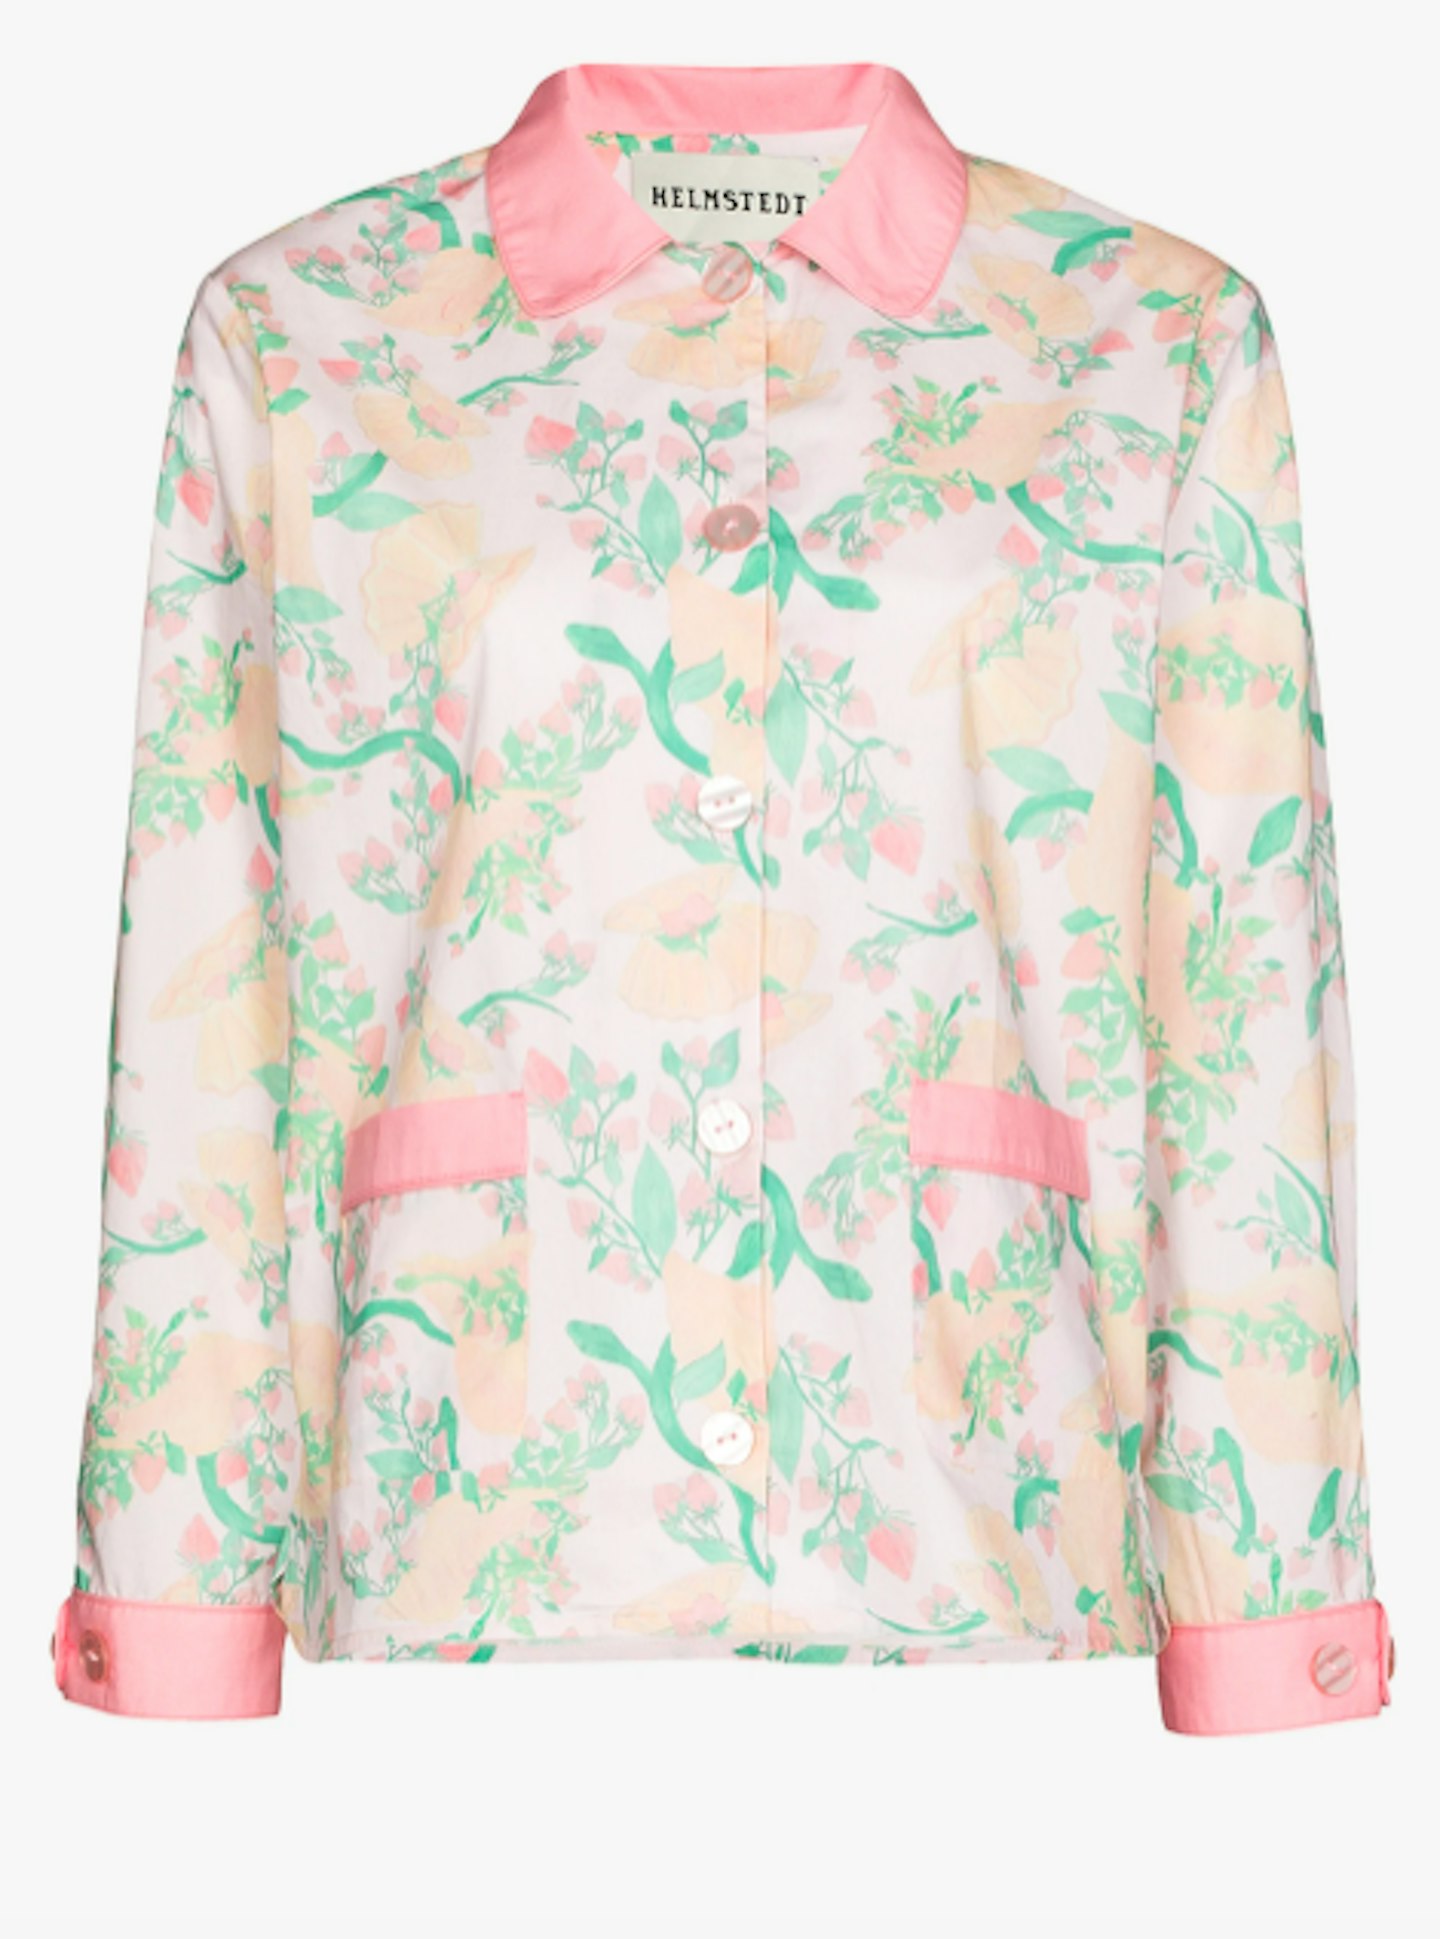 Helmstedt, Strawberry Print Pyjama Shirt, £290 at Browns